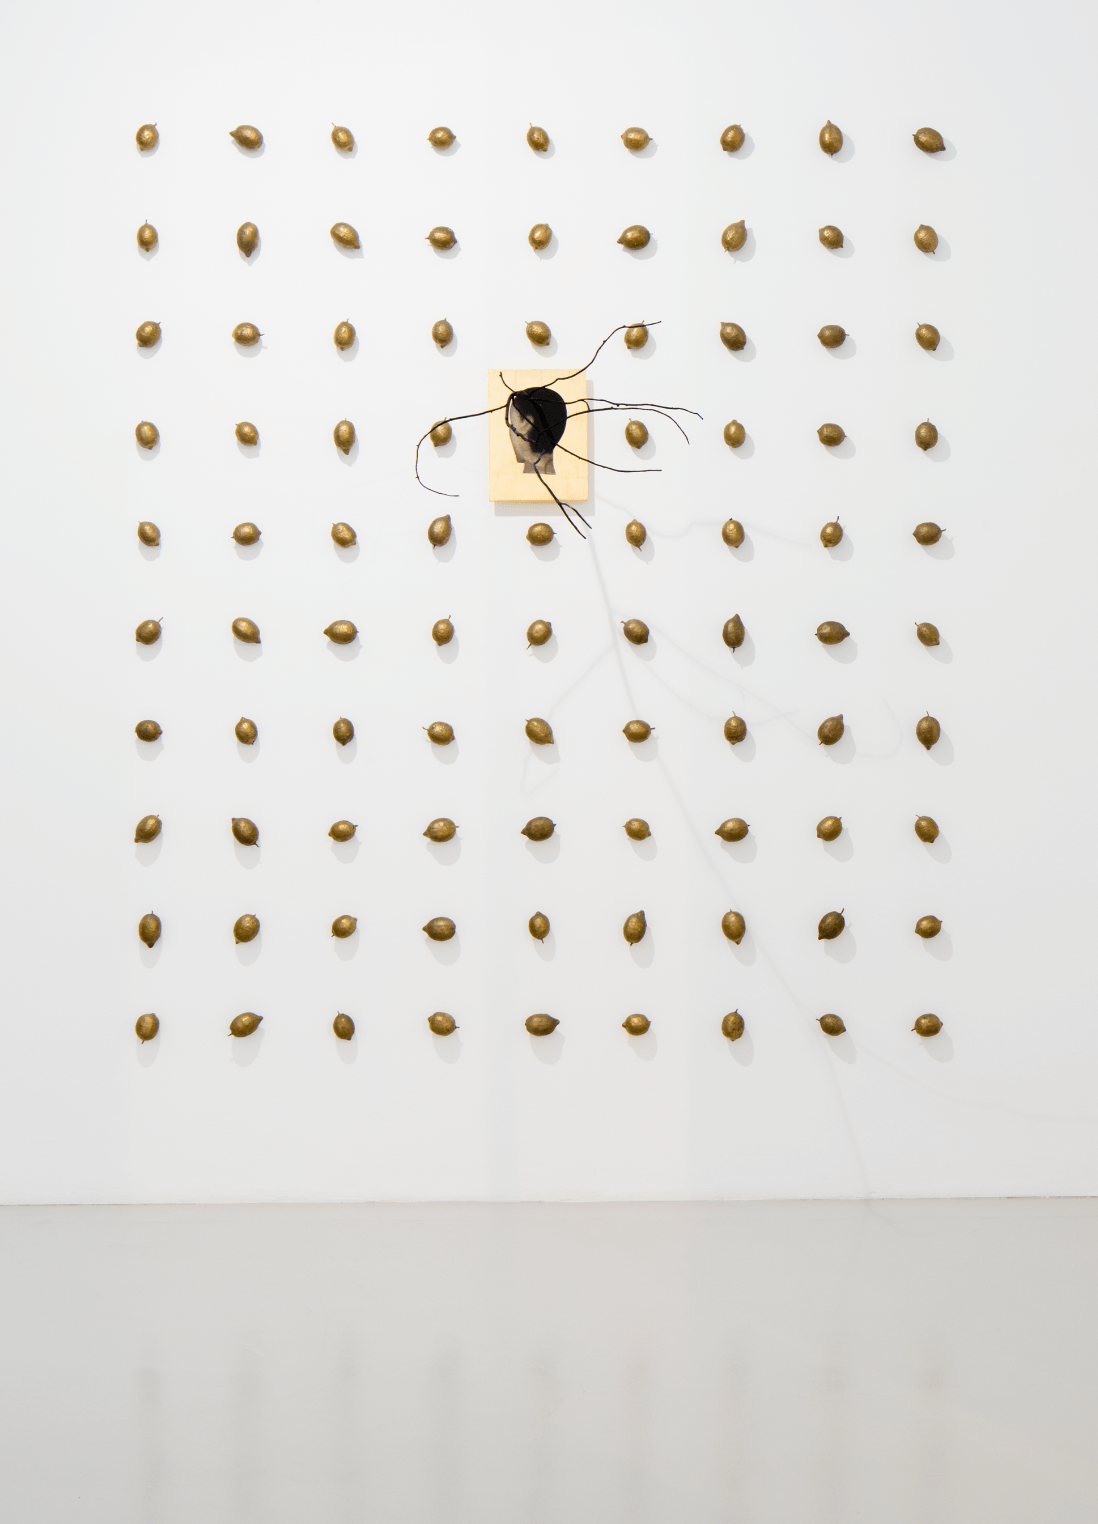 Mimmo Paladino, Untitled, 2011